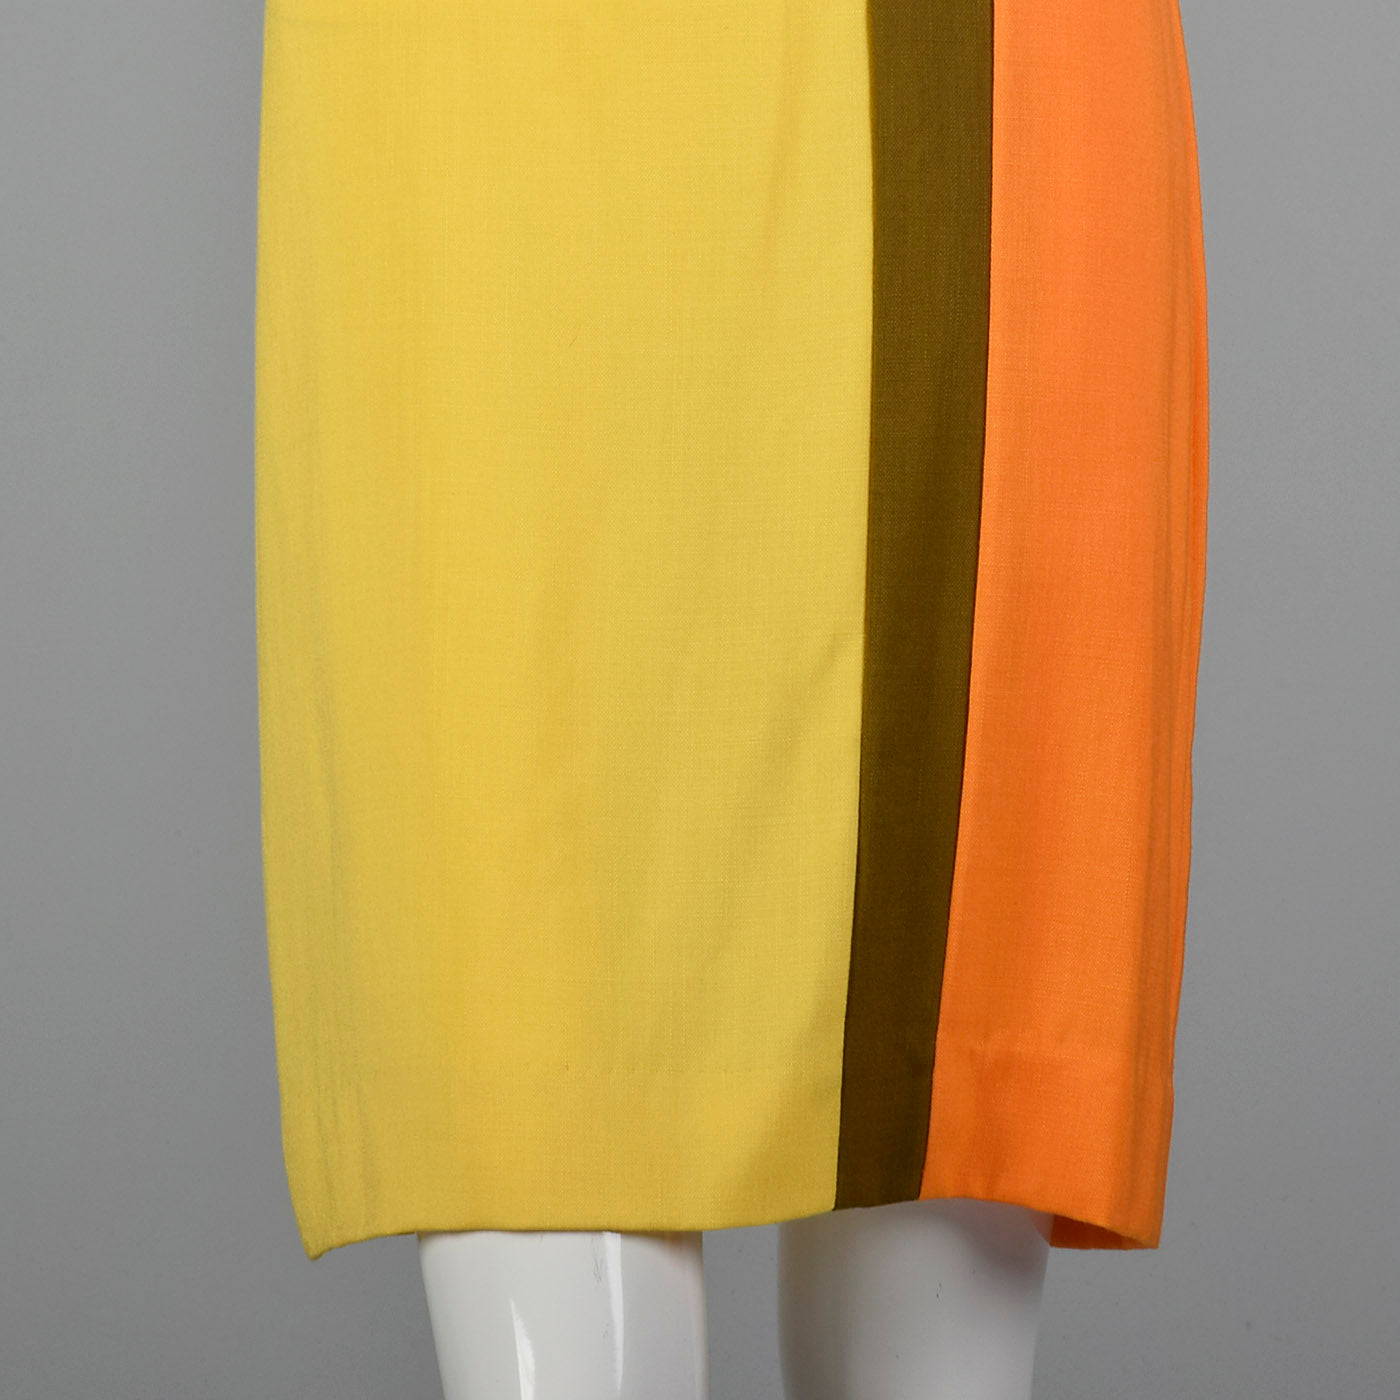 1960s Deadstock Colorblock Shift Dress